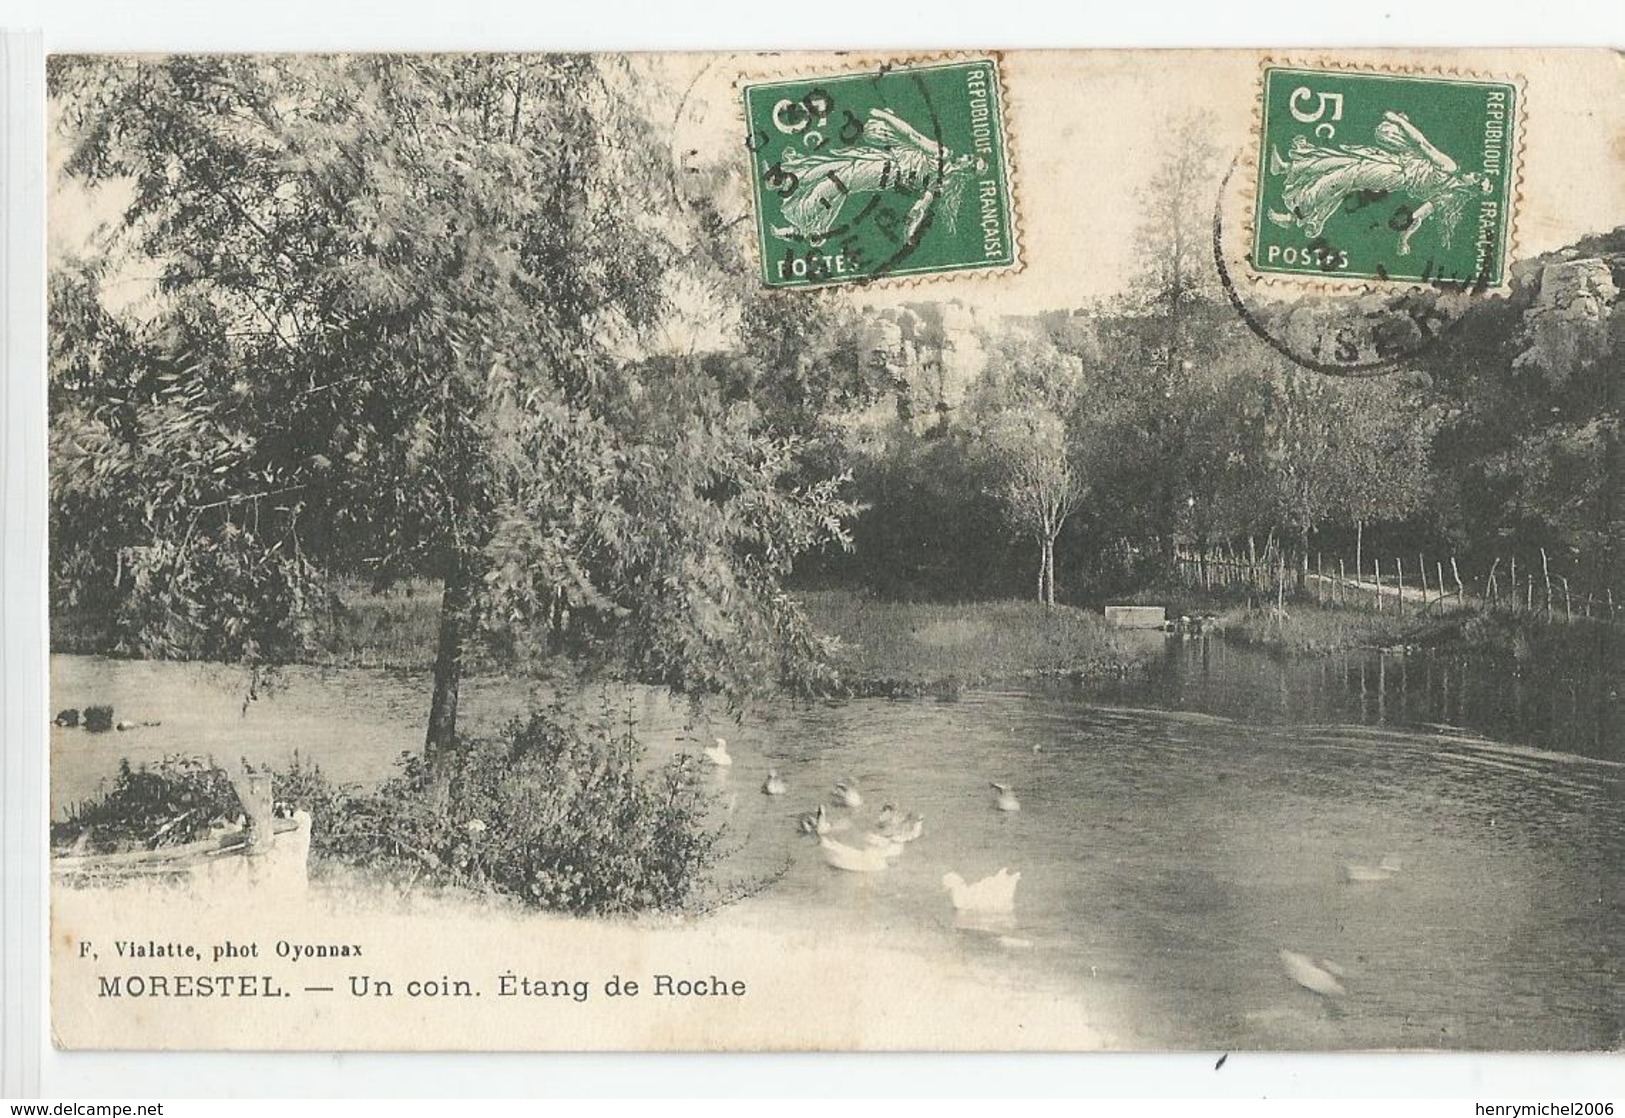 38 Isère Morestel Un Coin étang De Roche 1911 , Ed Vialatte D'oyonnax - Morestel